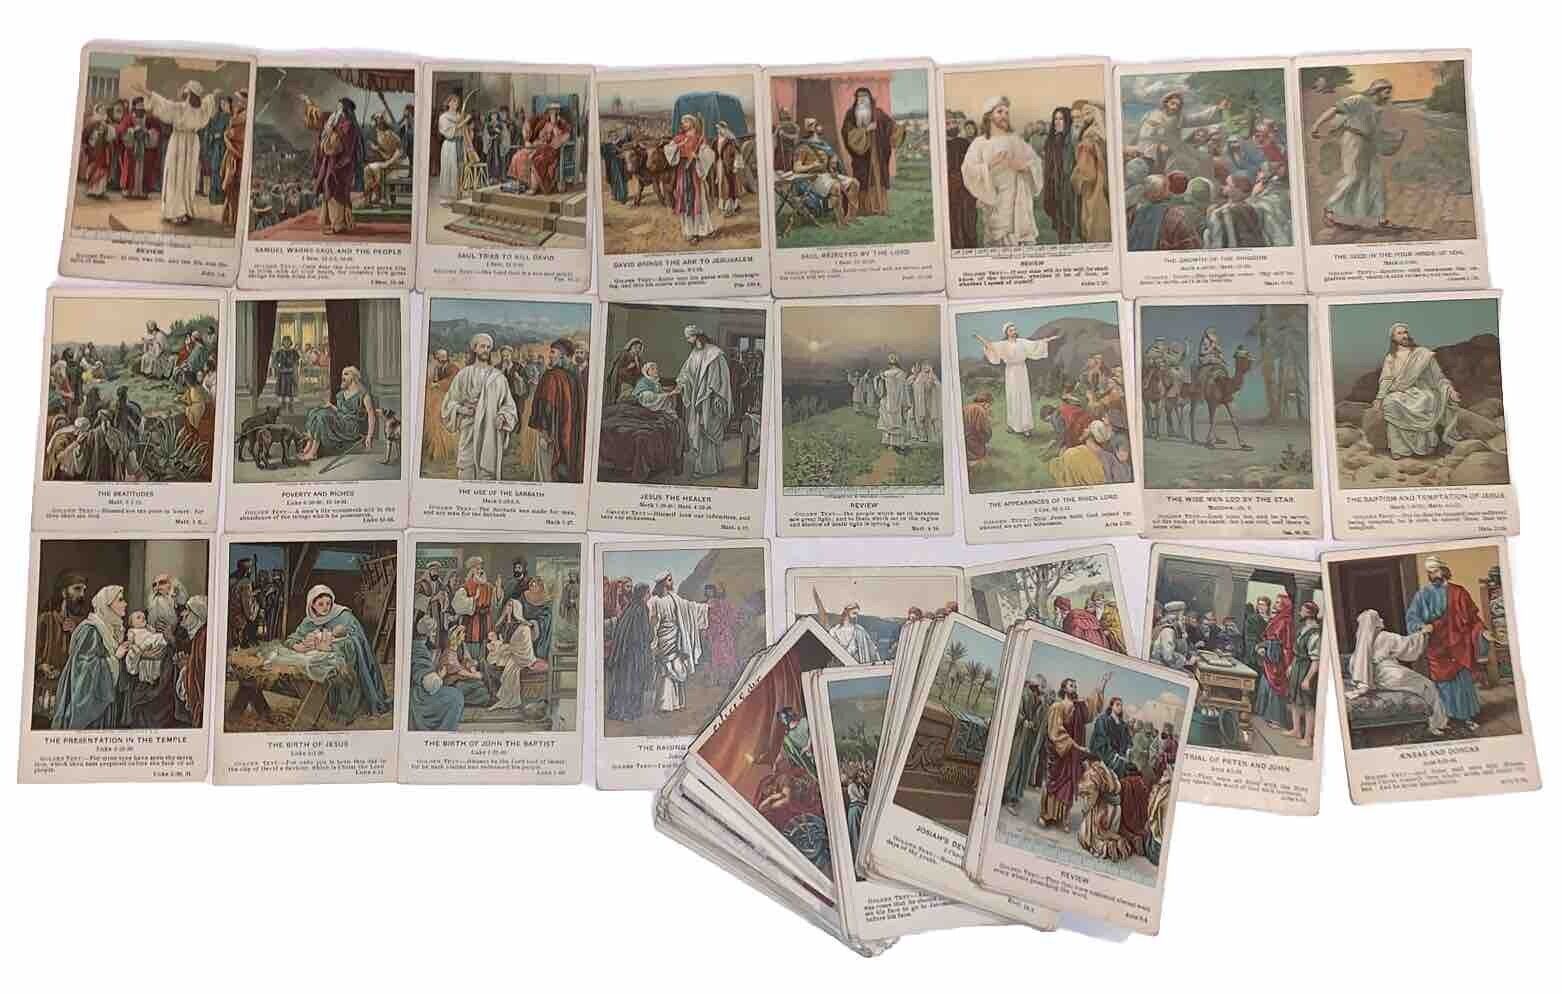 APPROX 120, BEREAN RELIGIOUS CARDS, circa 1910, RELIGION, BEAUTIFUL ARTWORK